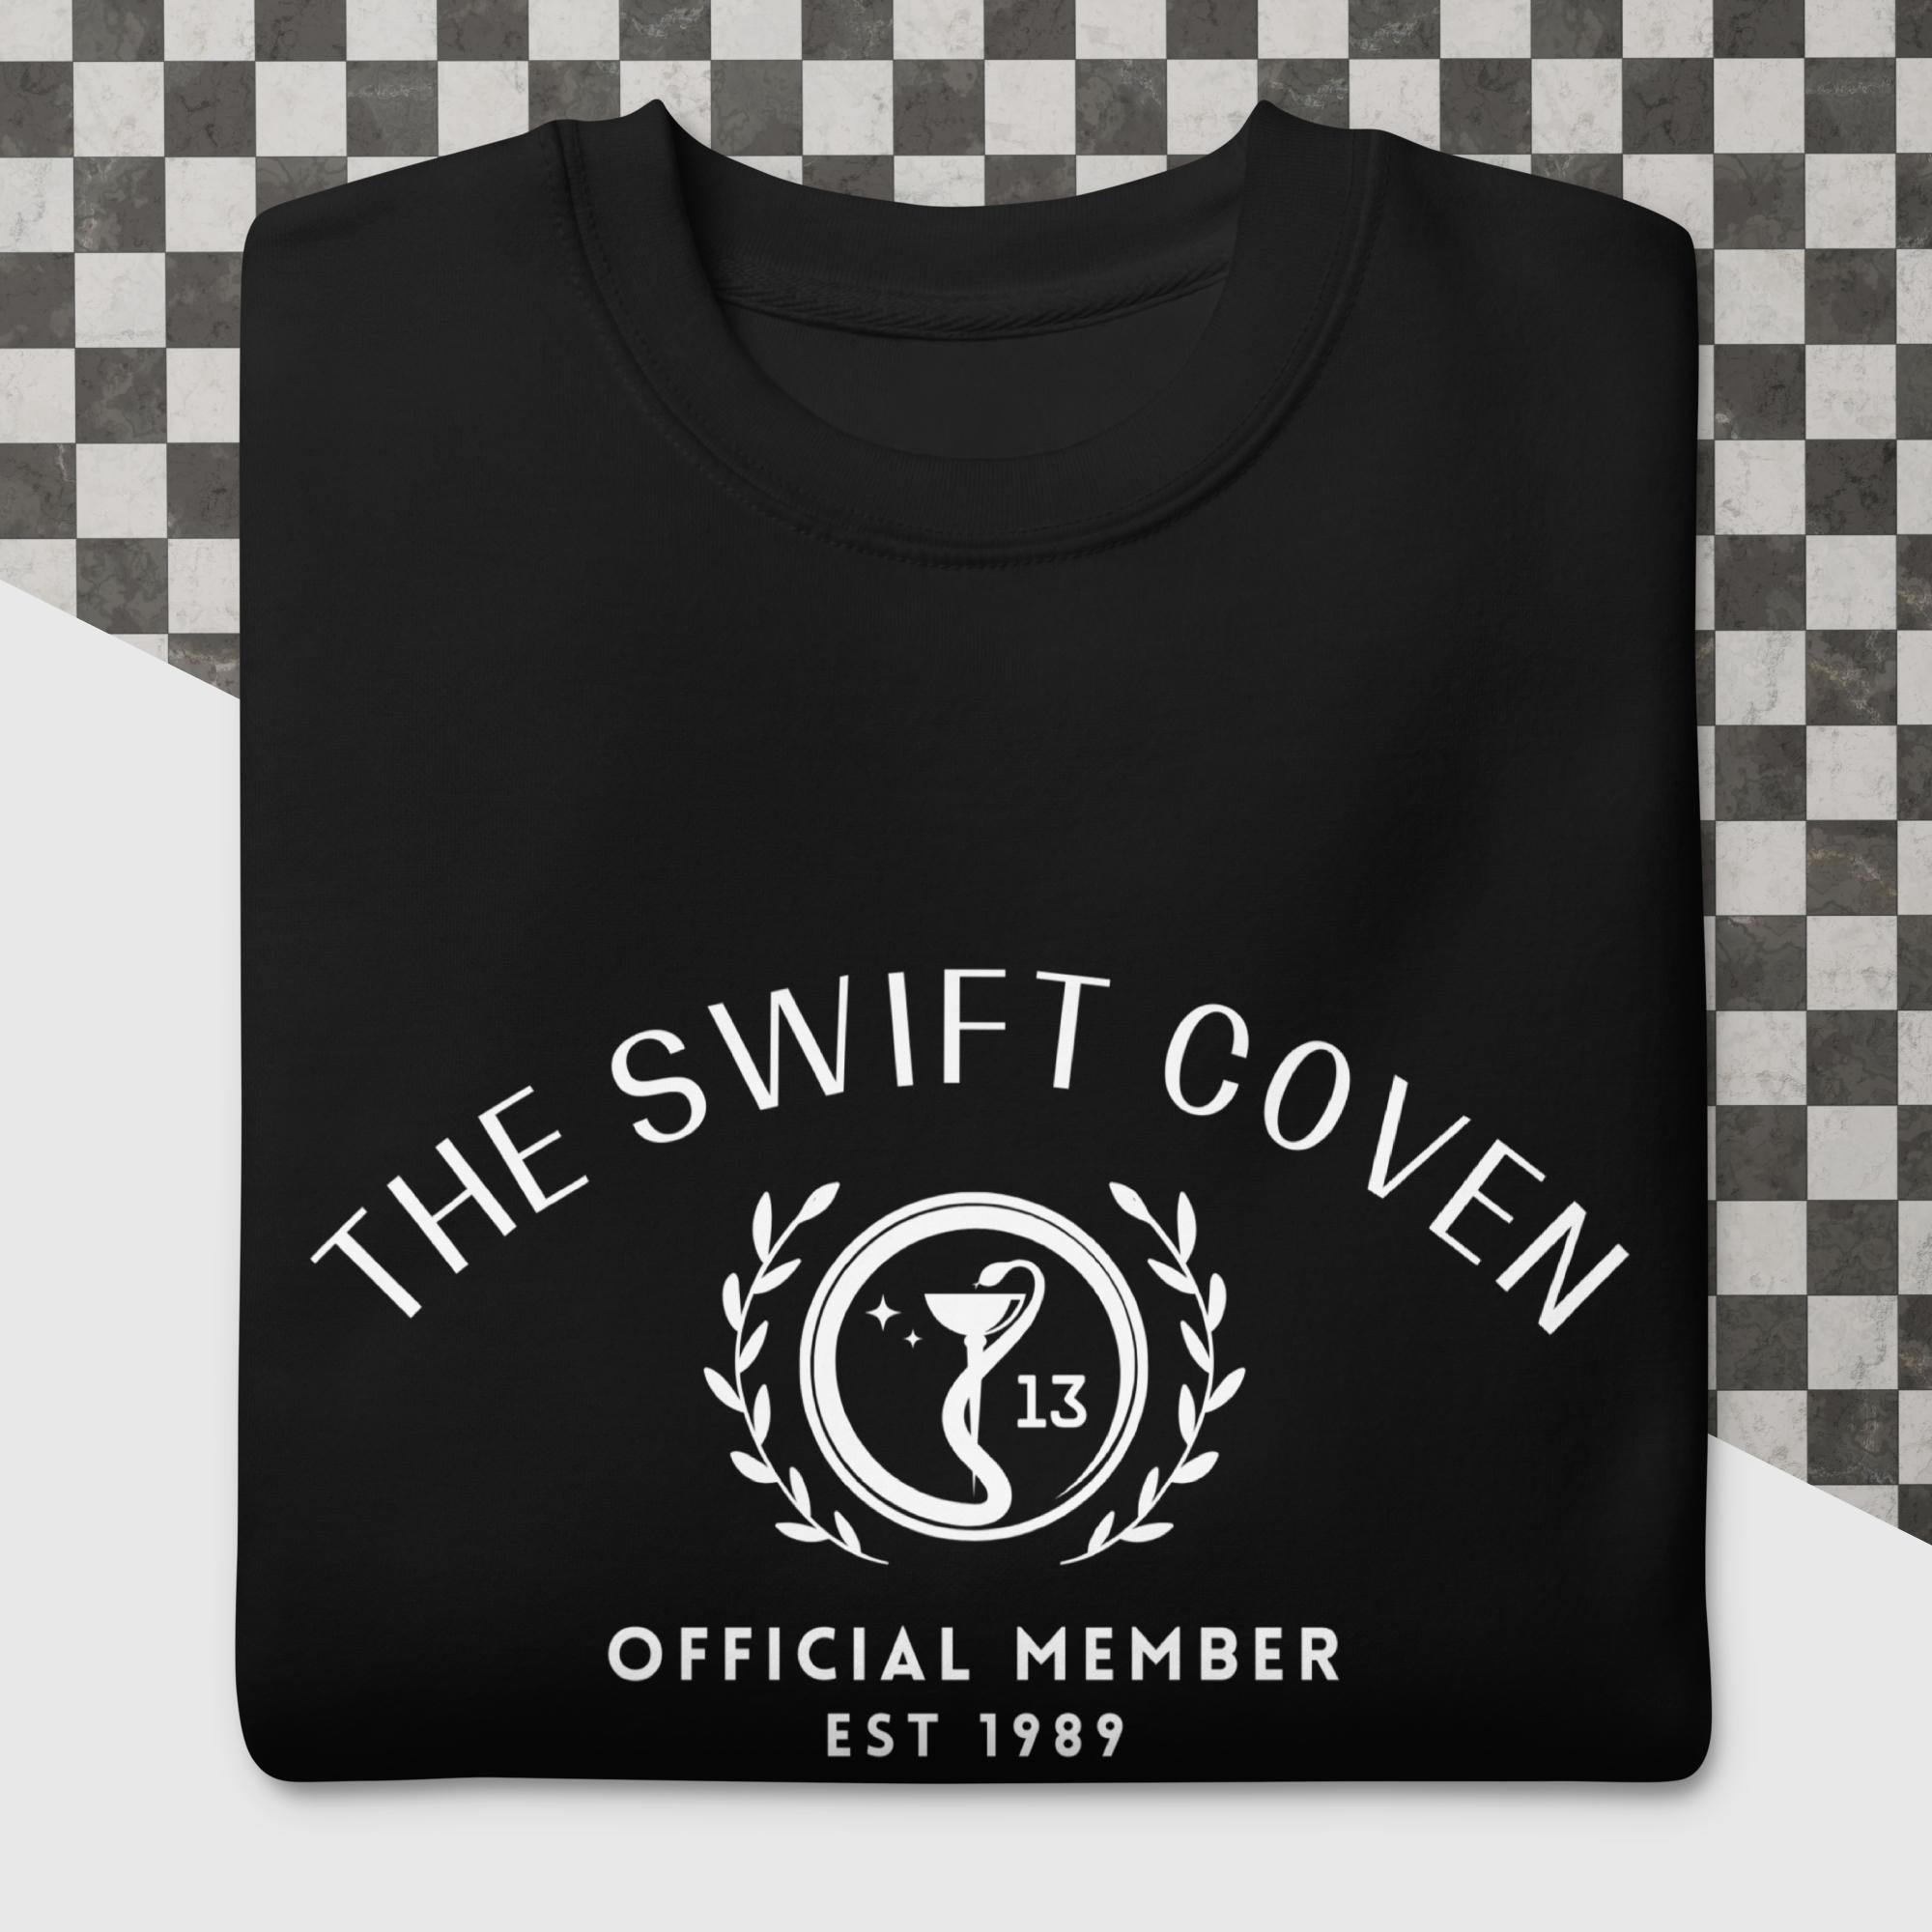 Taylor Swift, The Swift Coven Sweatshirt Est 1989